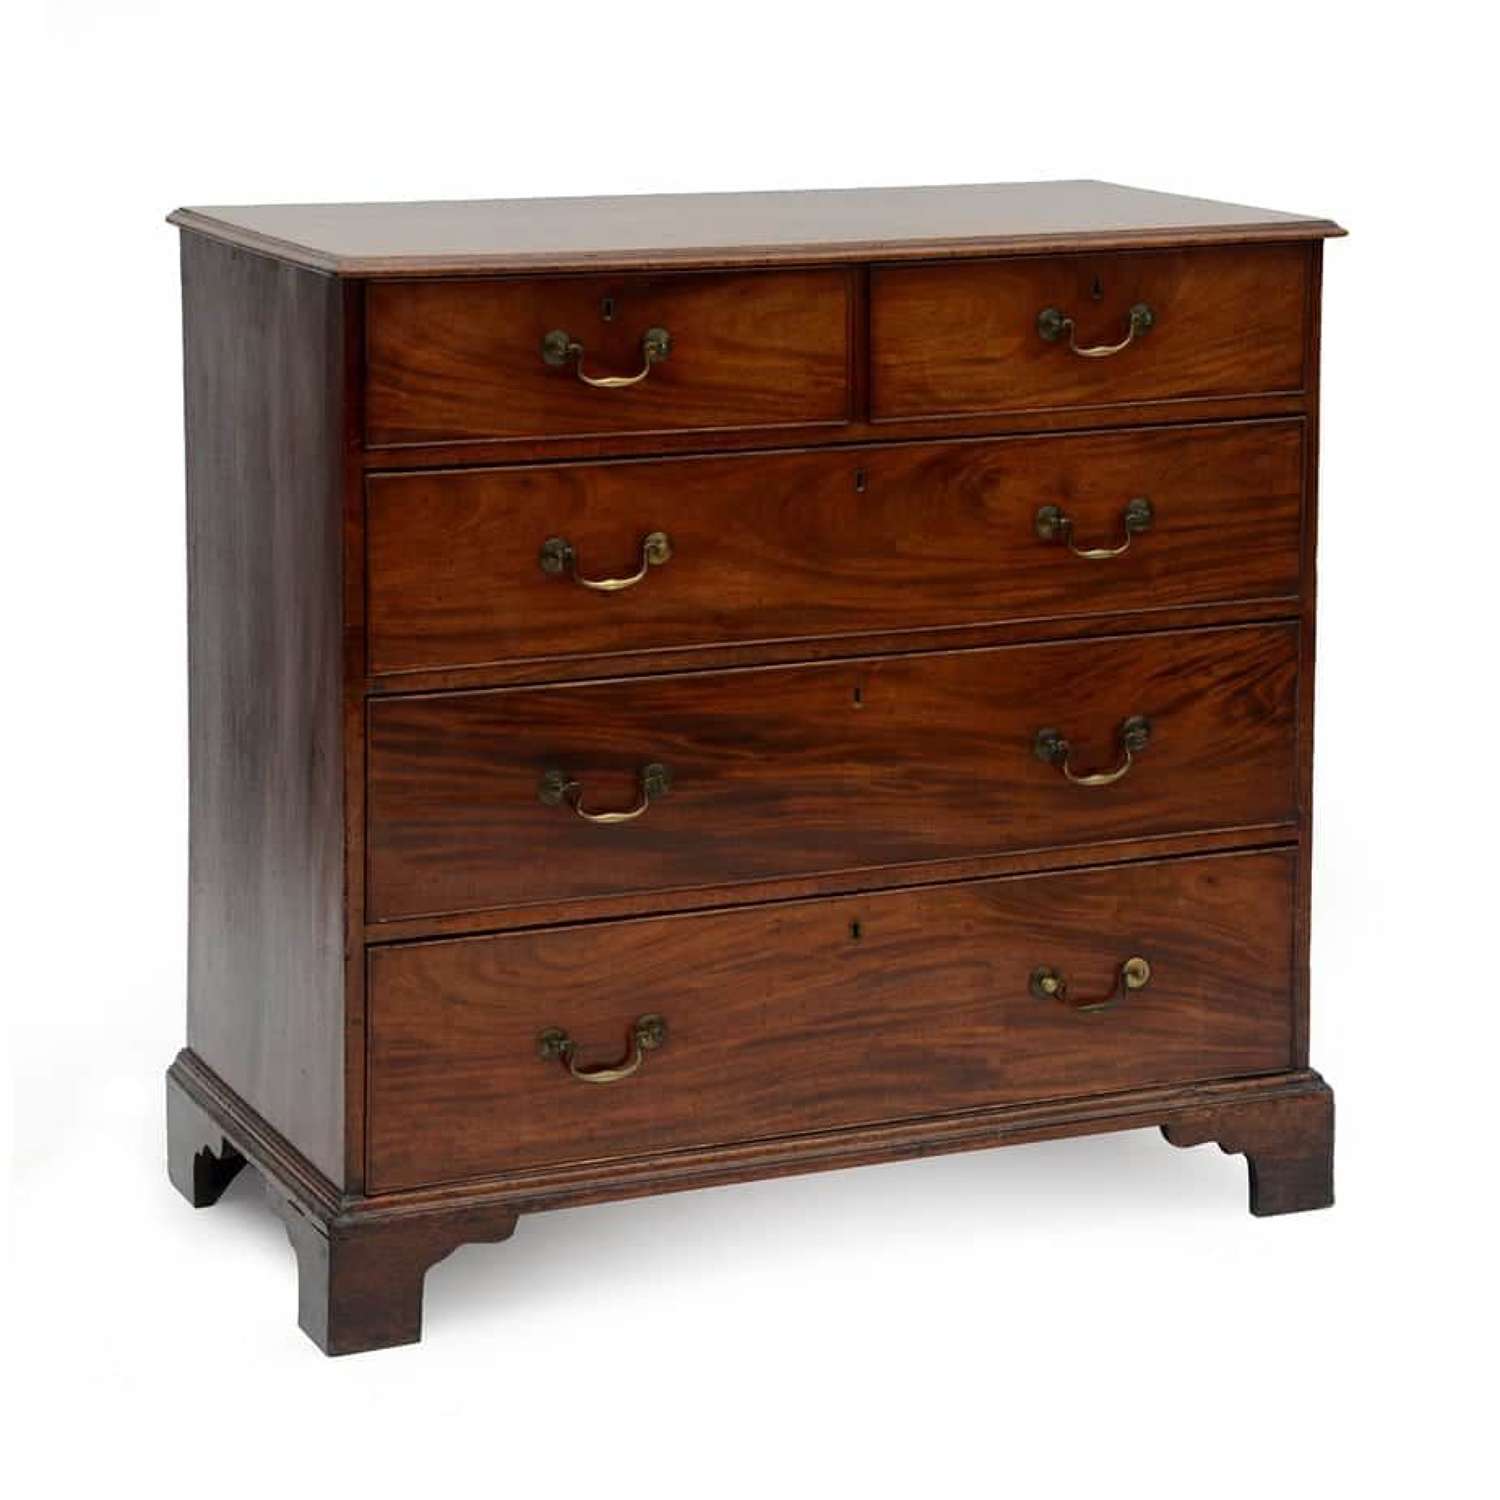 Georgian cuban mahogany chest of drawers